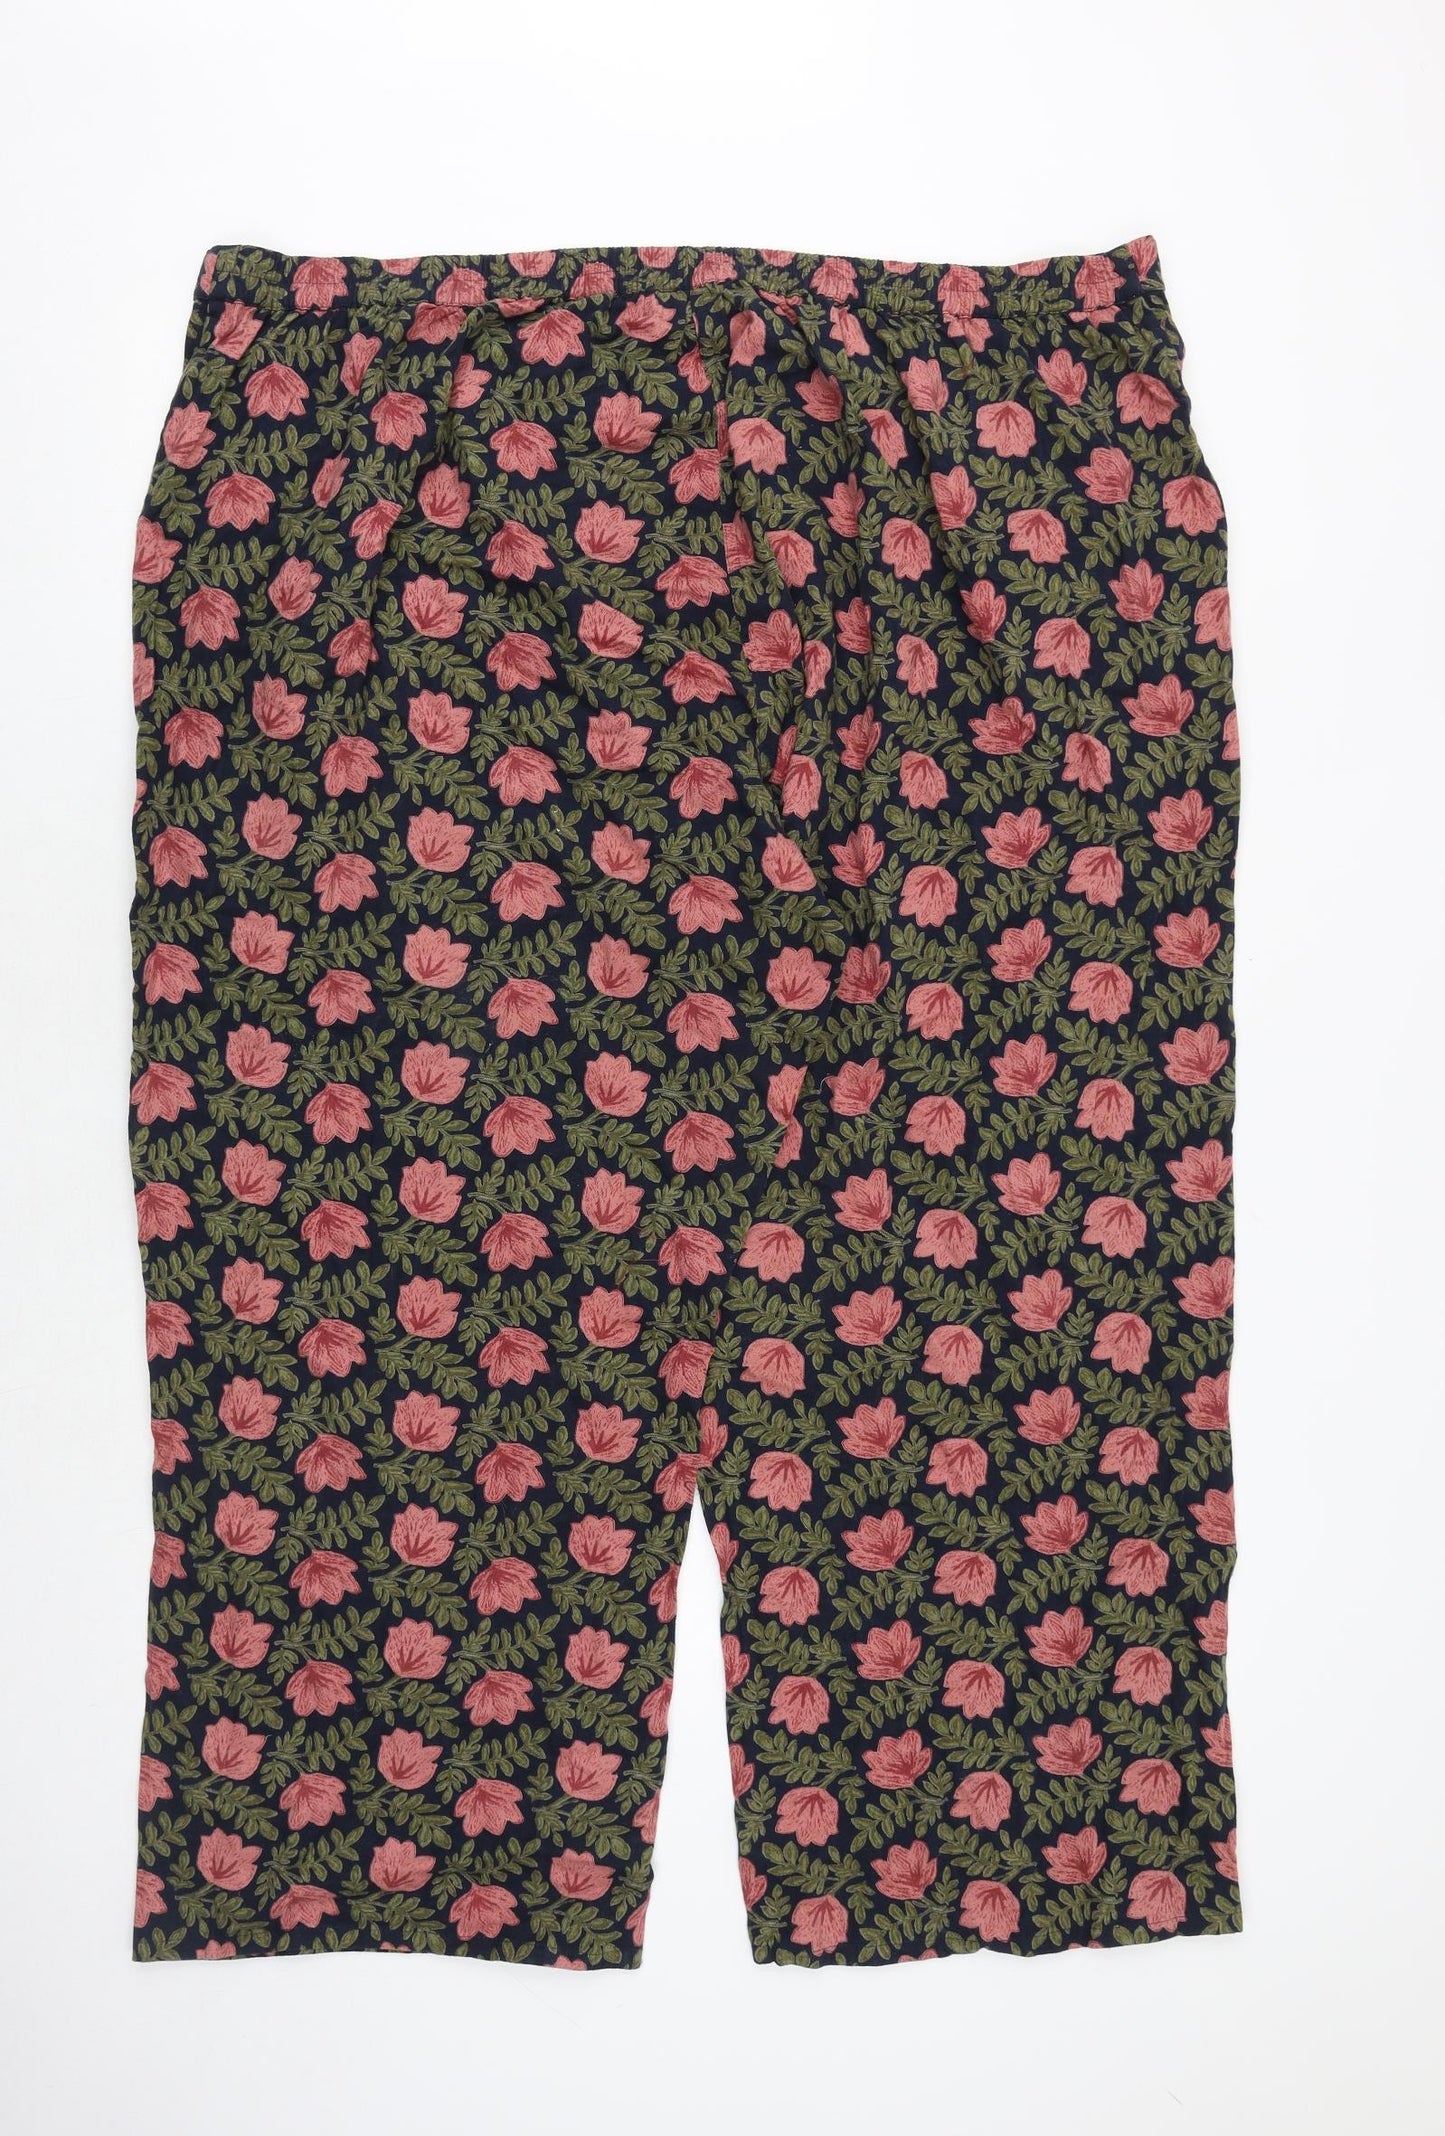 Seasalt Womens Multicoloured Floral Cotton Trousers Size 26 Regular Drawstring